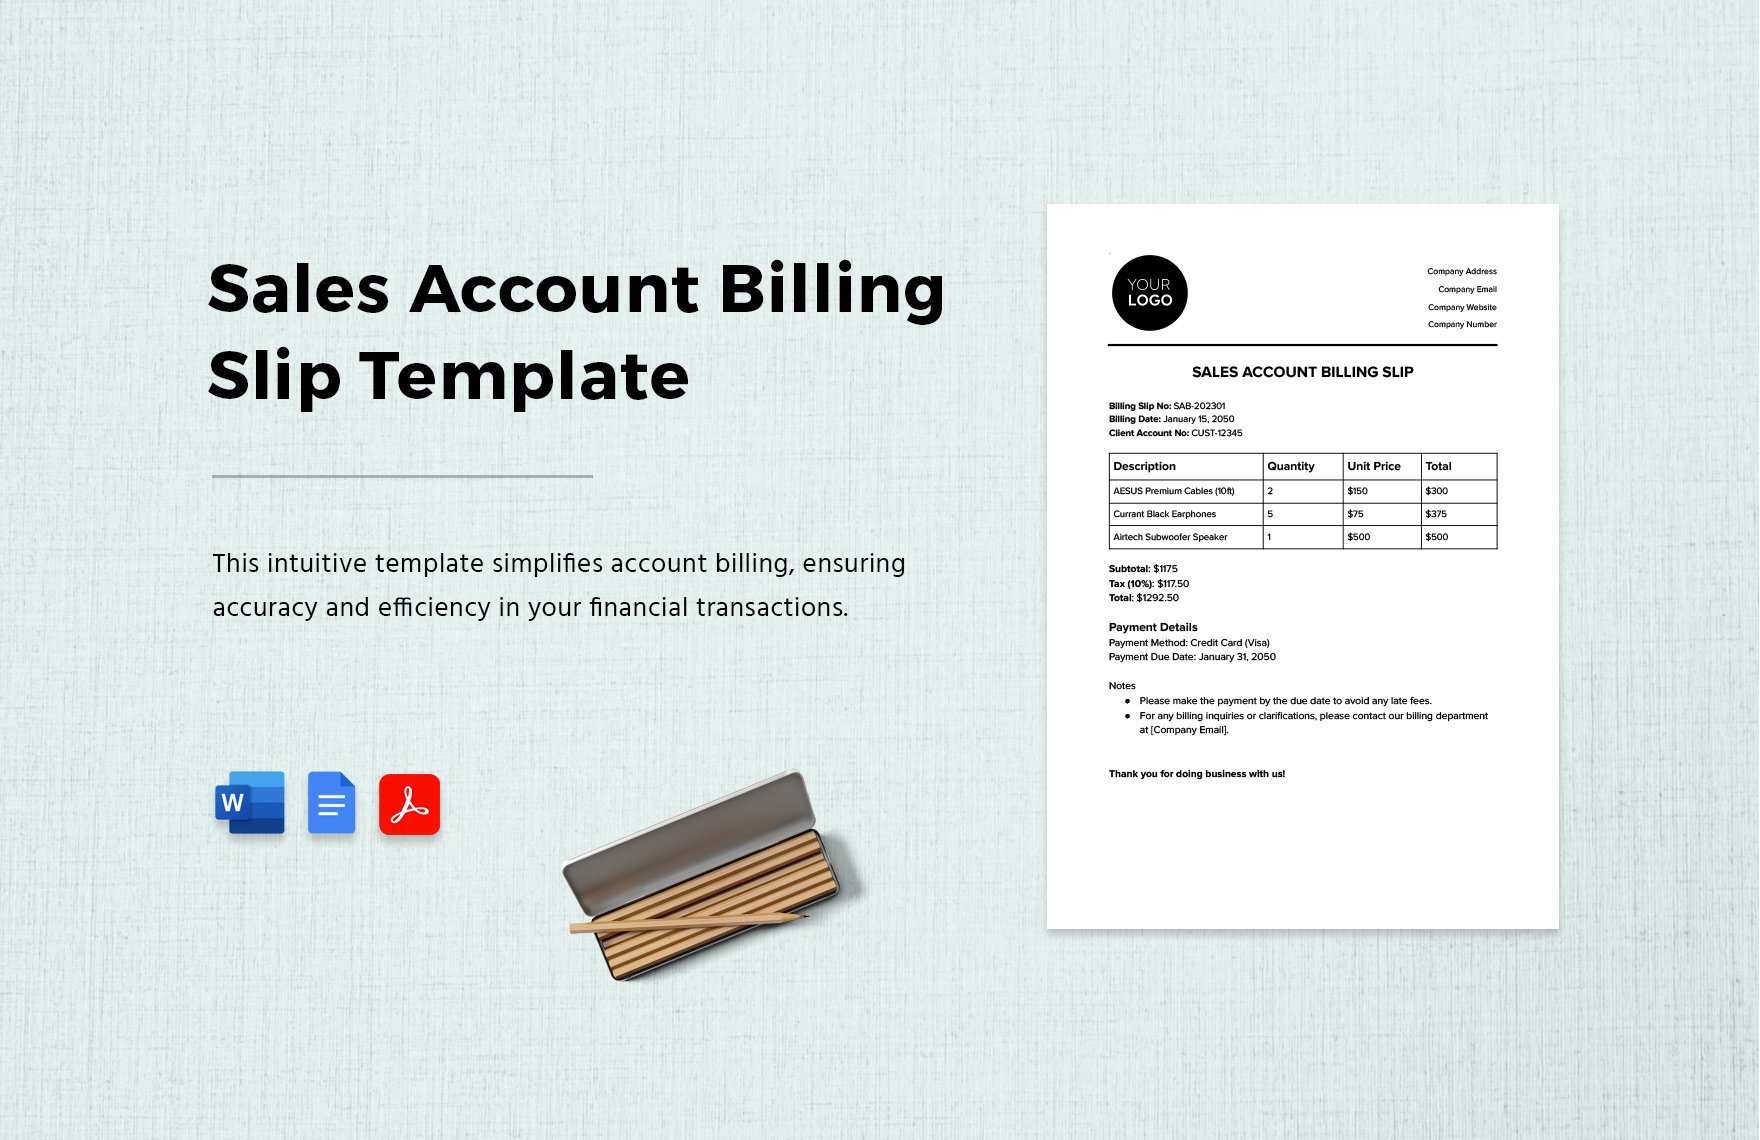 Sales Account Billing Slip Template